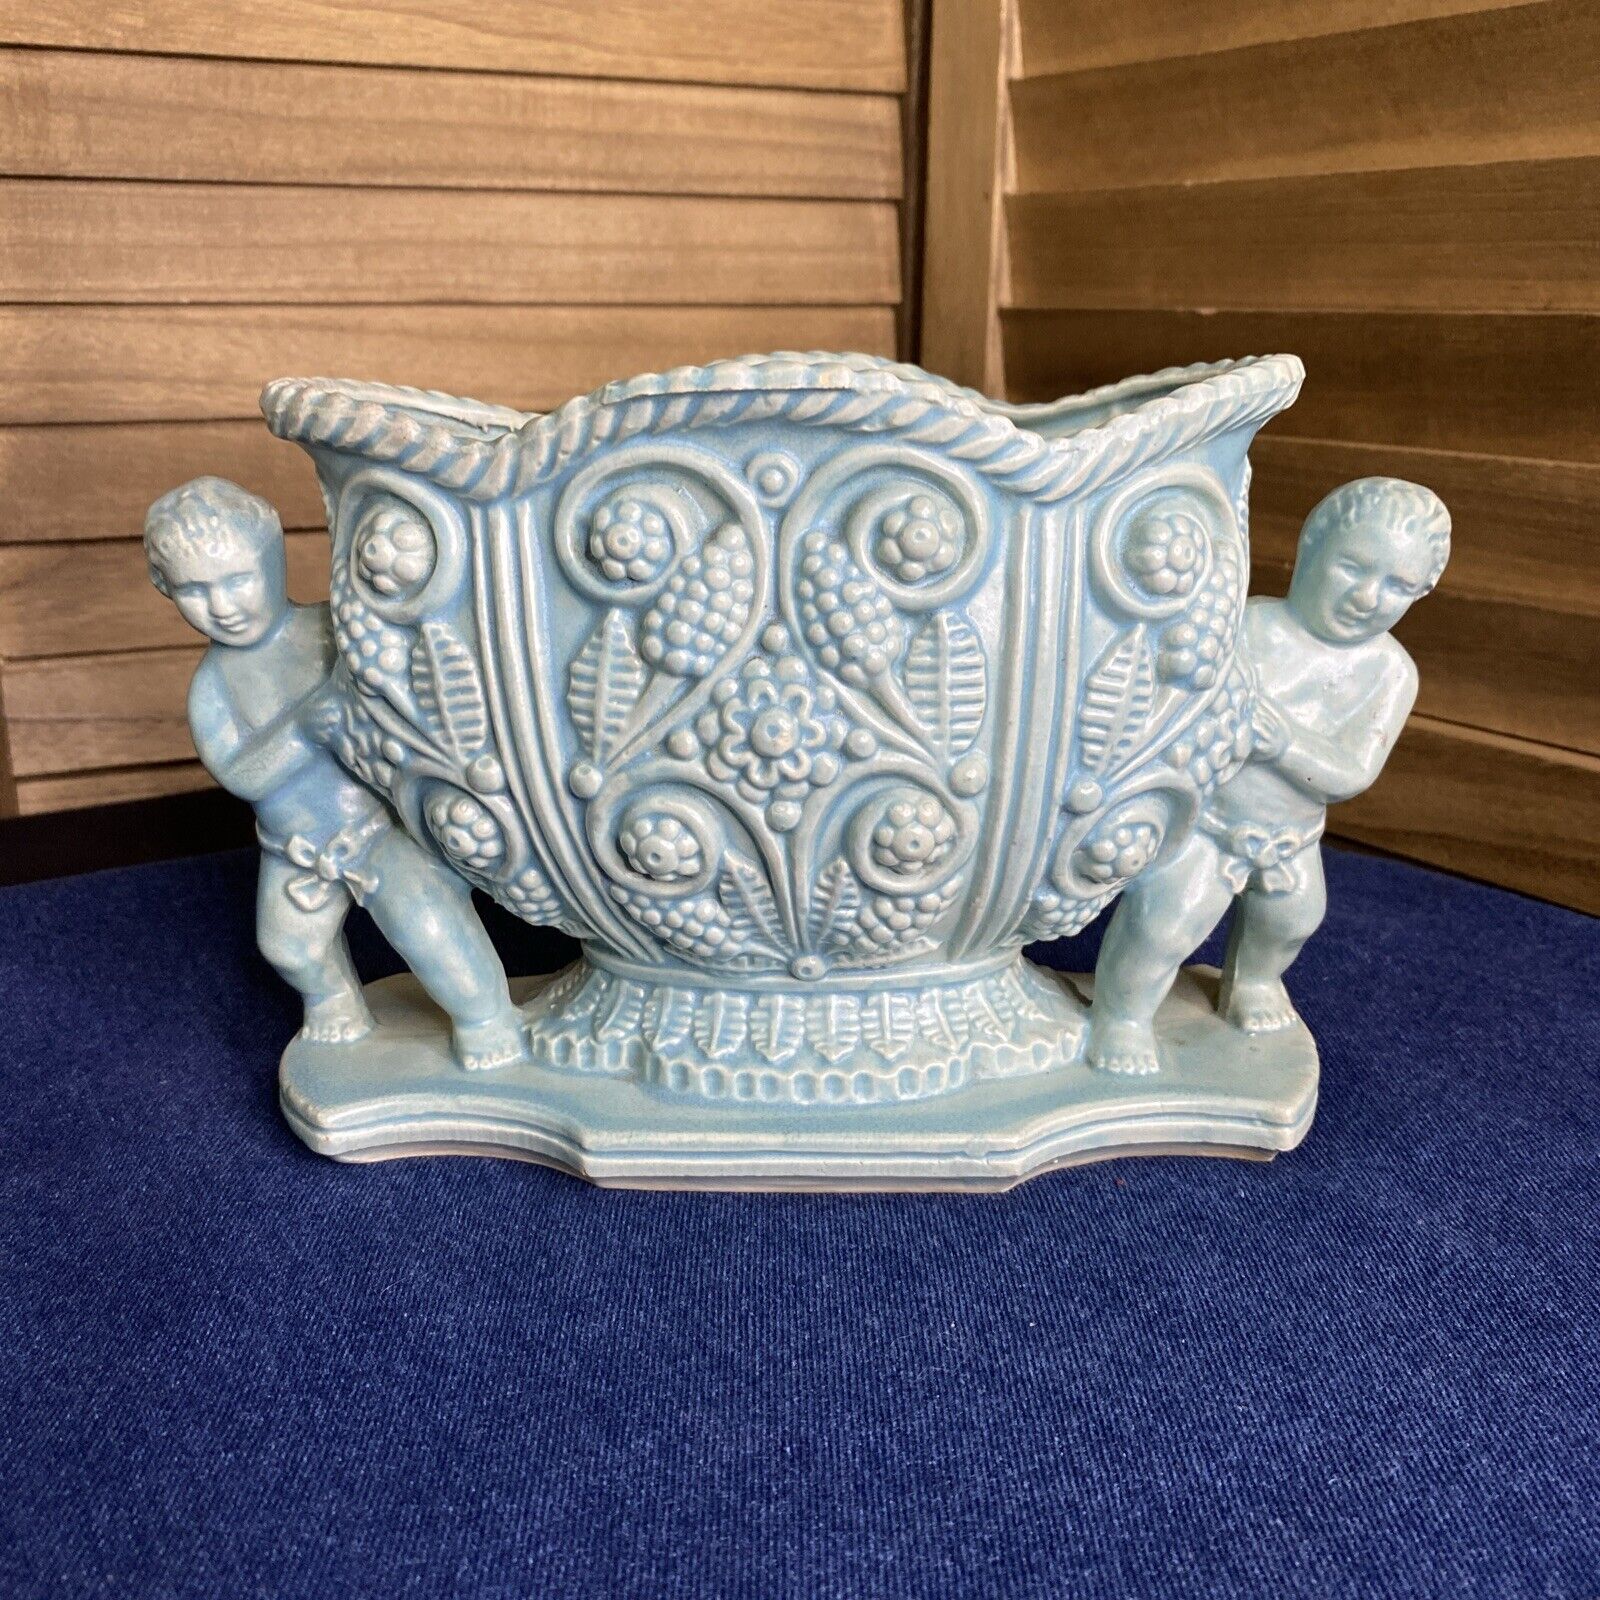 Jardiniere Planter Vase Ceramic Mid Century Putto French Blue Ornate Baroque